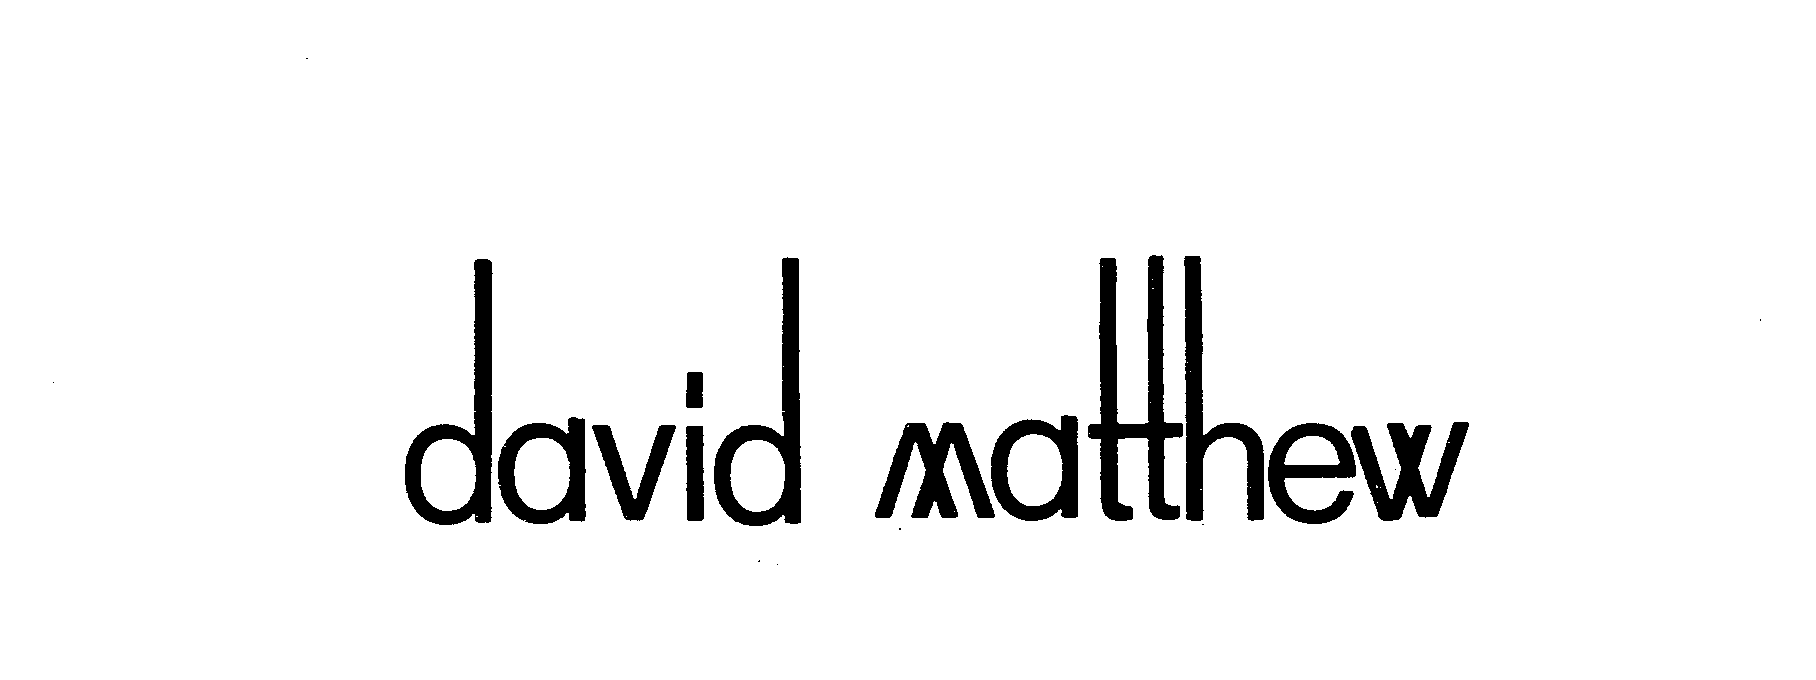  DAVID MATTHEW